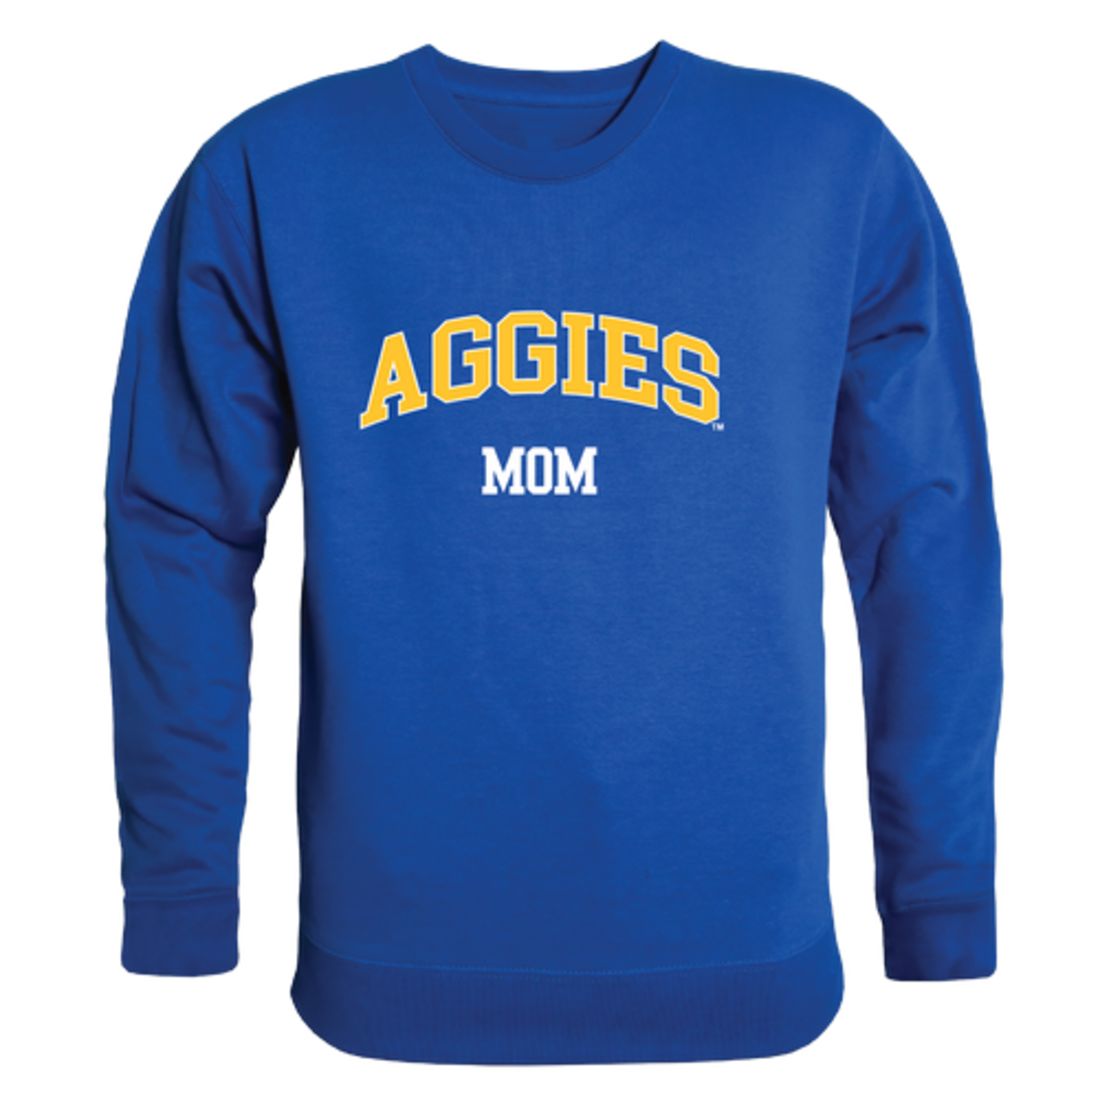 North Carolina A&T State University Aggies Mom Fleece Crewneck Pullover Sweatshirt